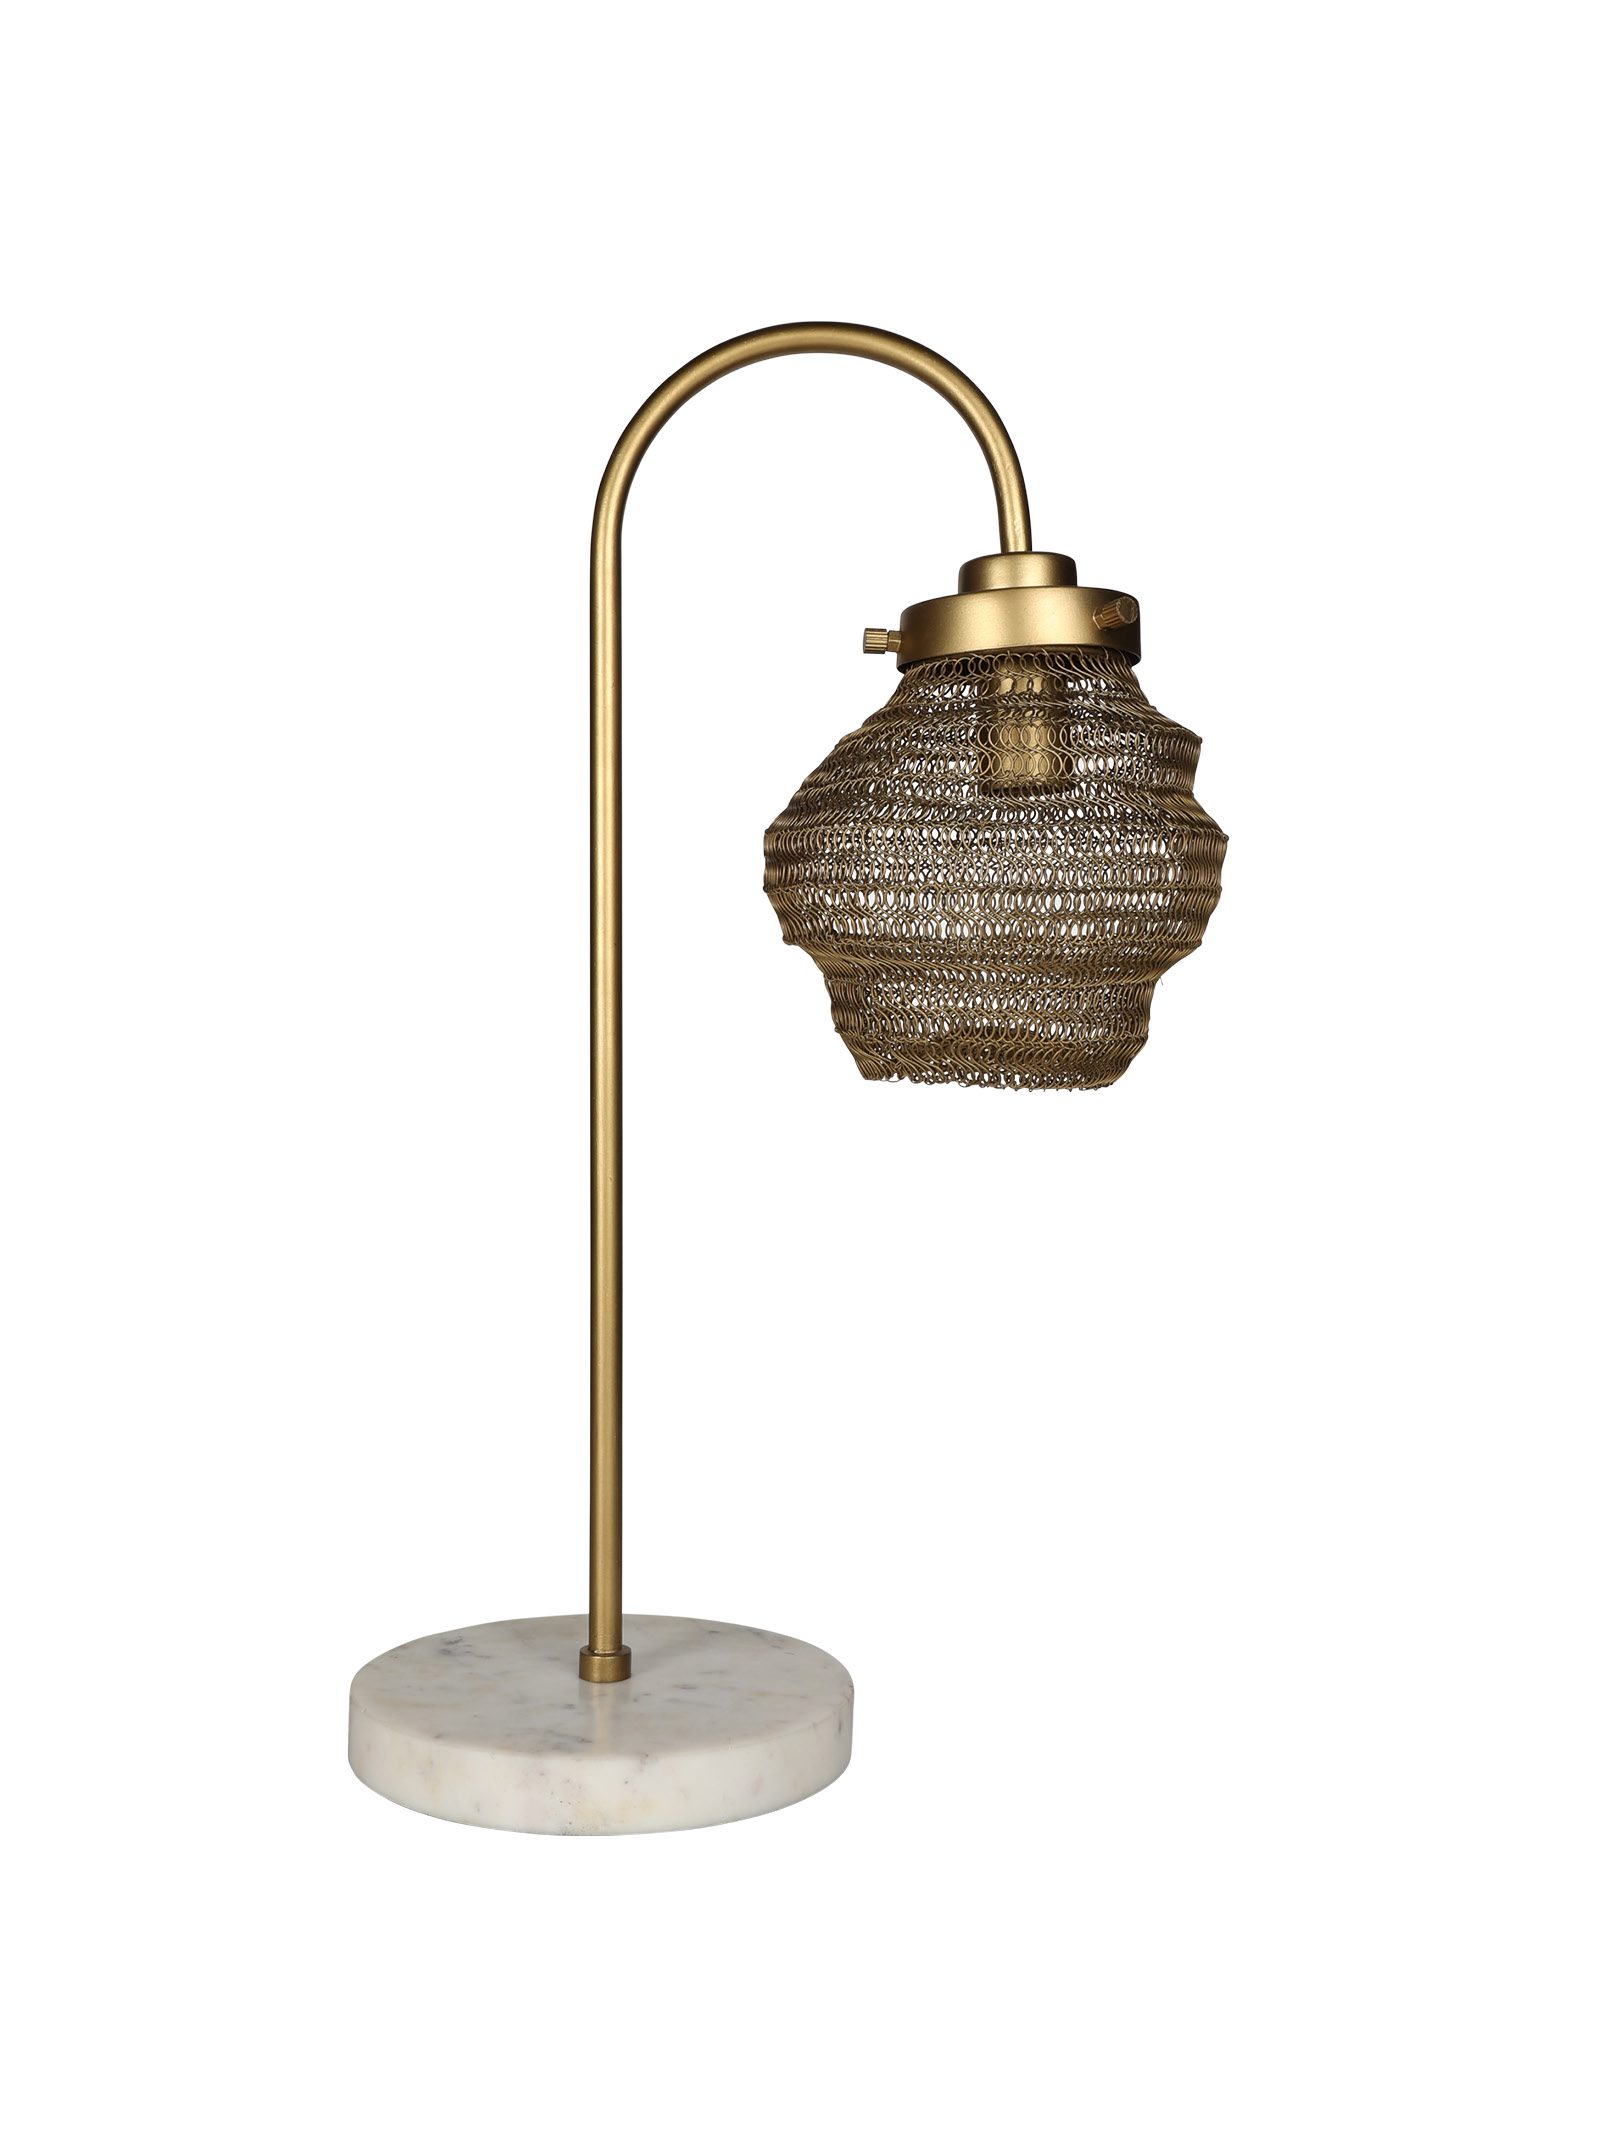 Rookery Bedside Lamp in Golden Finch